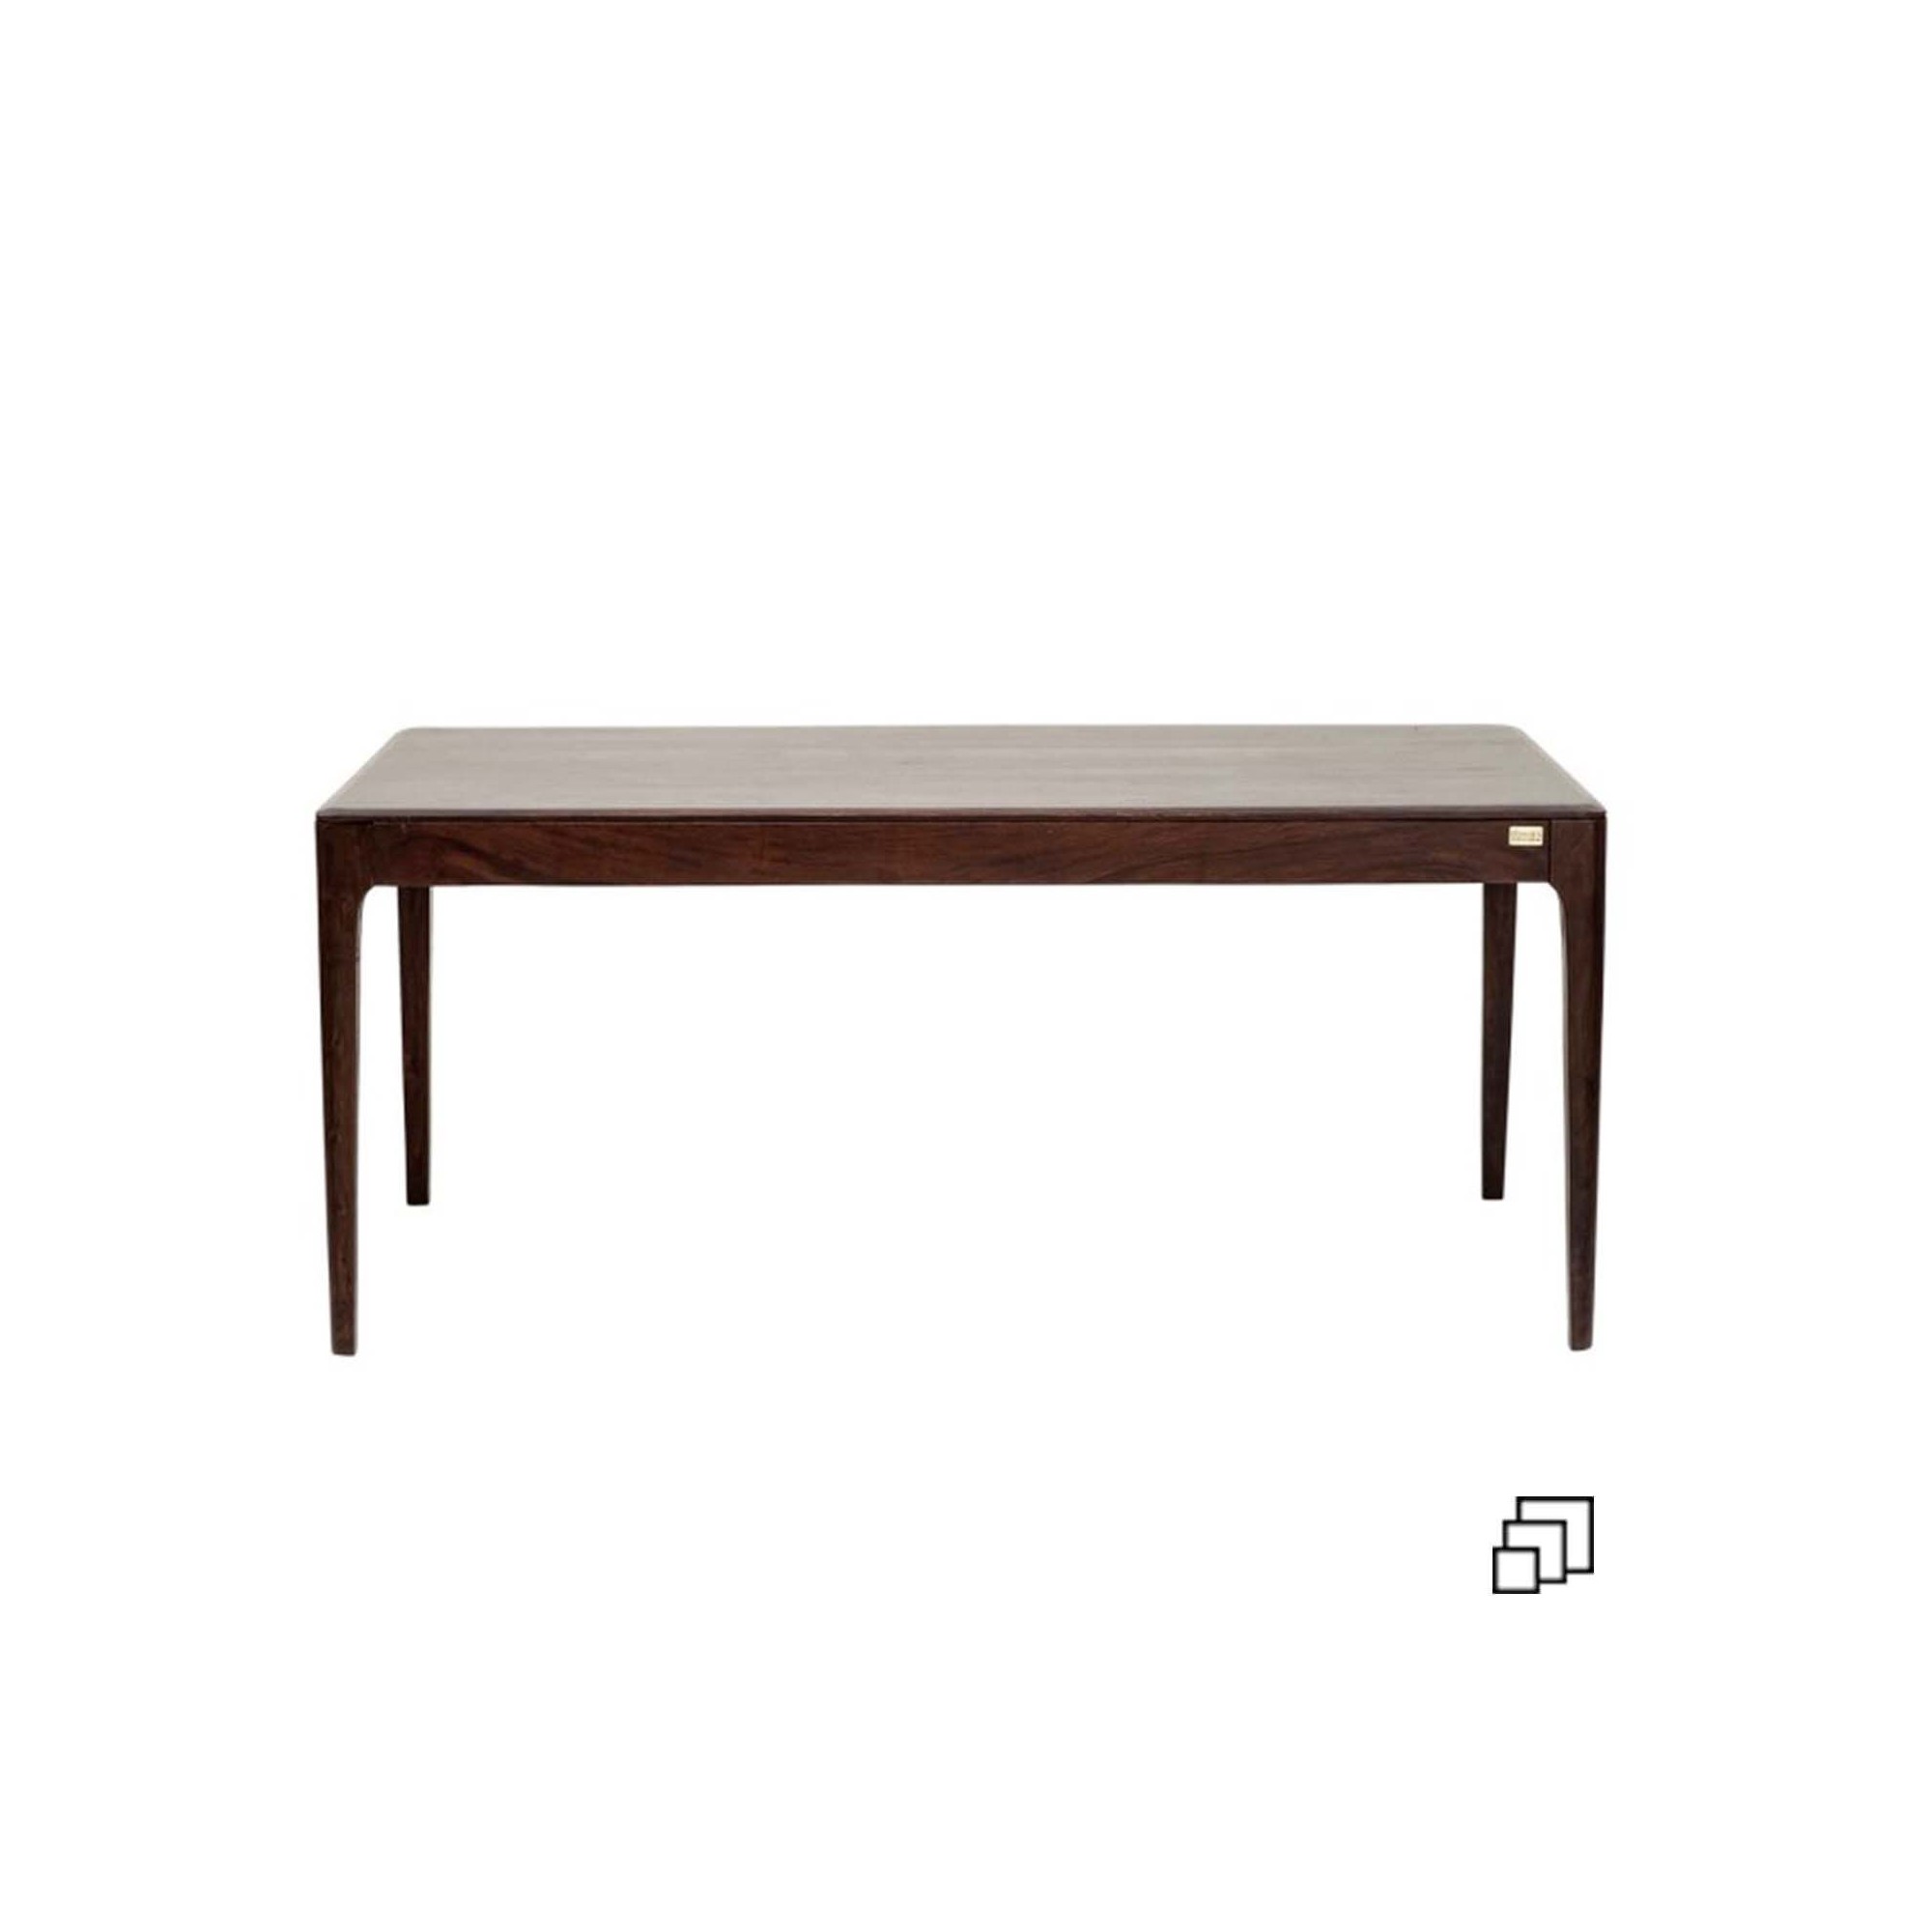 Brooklyn Walnut Table 160x80cm Kare Design